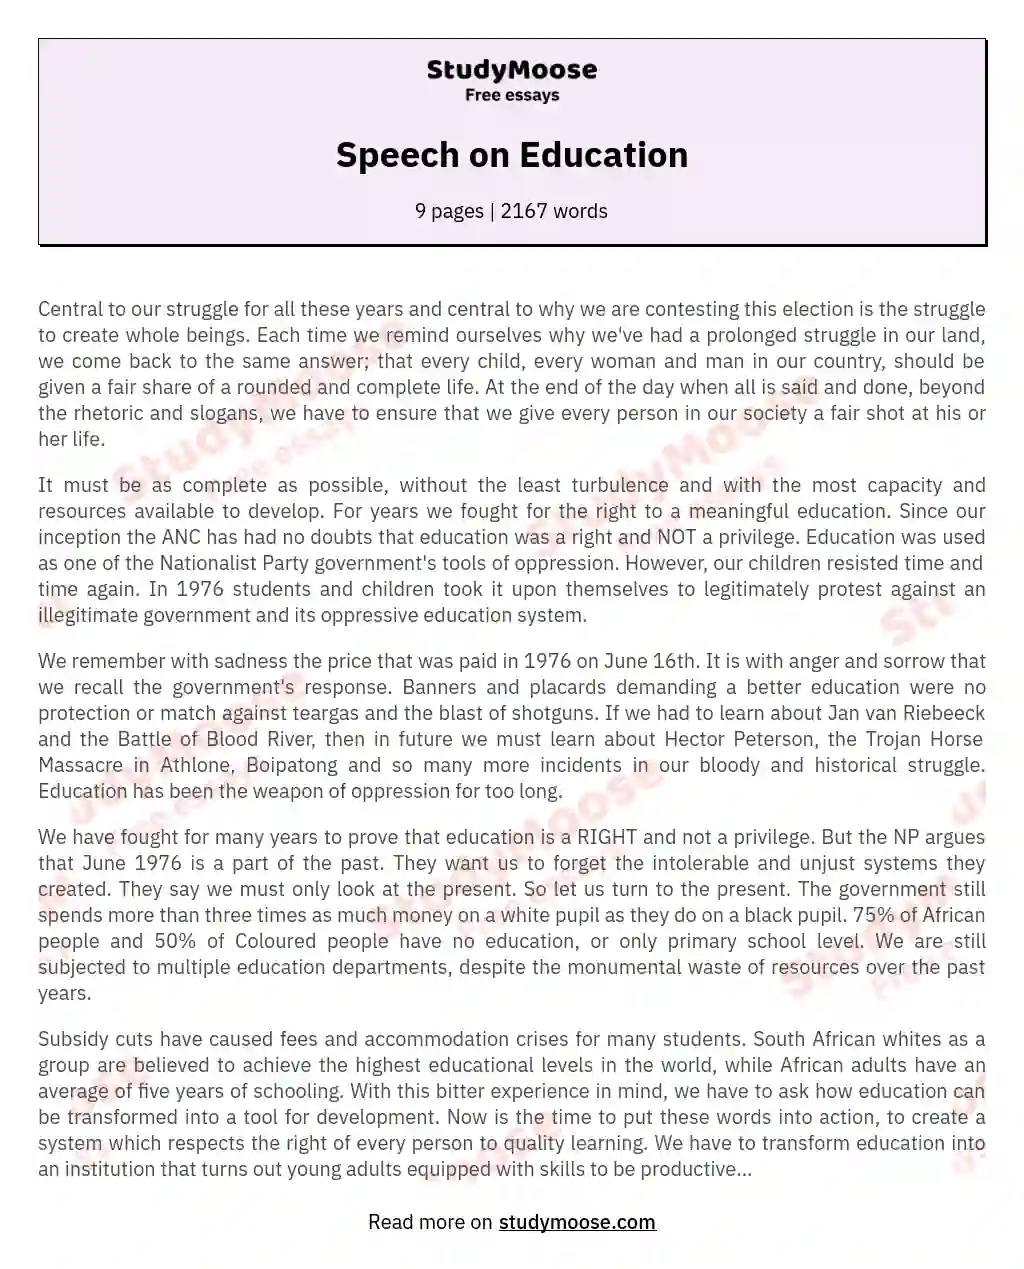 Speech on Education essay